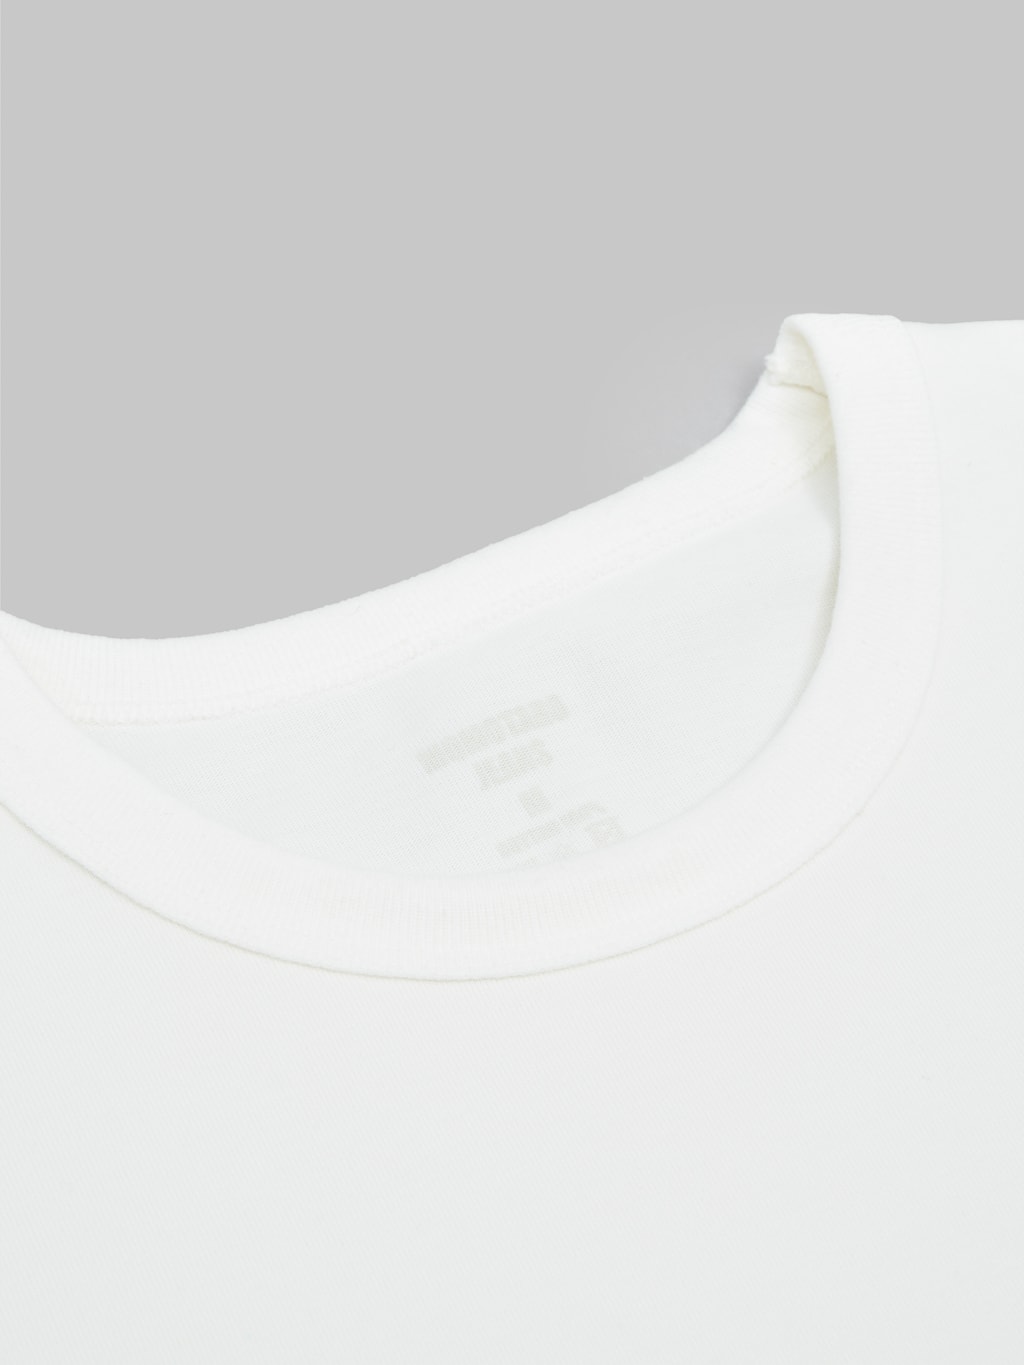 Momotaro MXTS1002 New Luxury Tacked GTB stripes Tshirt white stitching